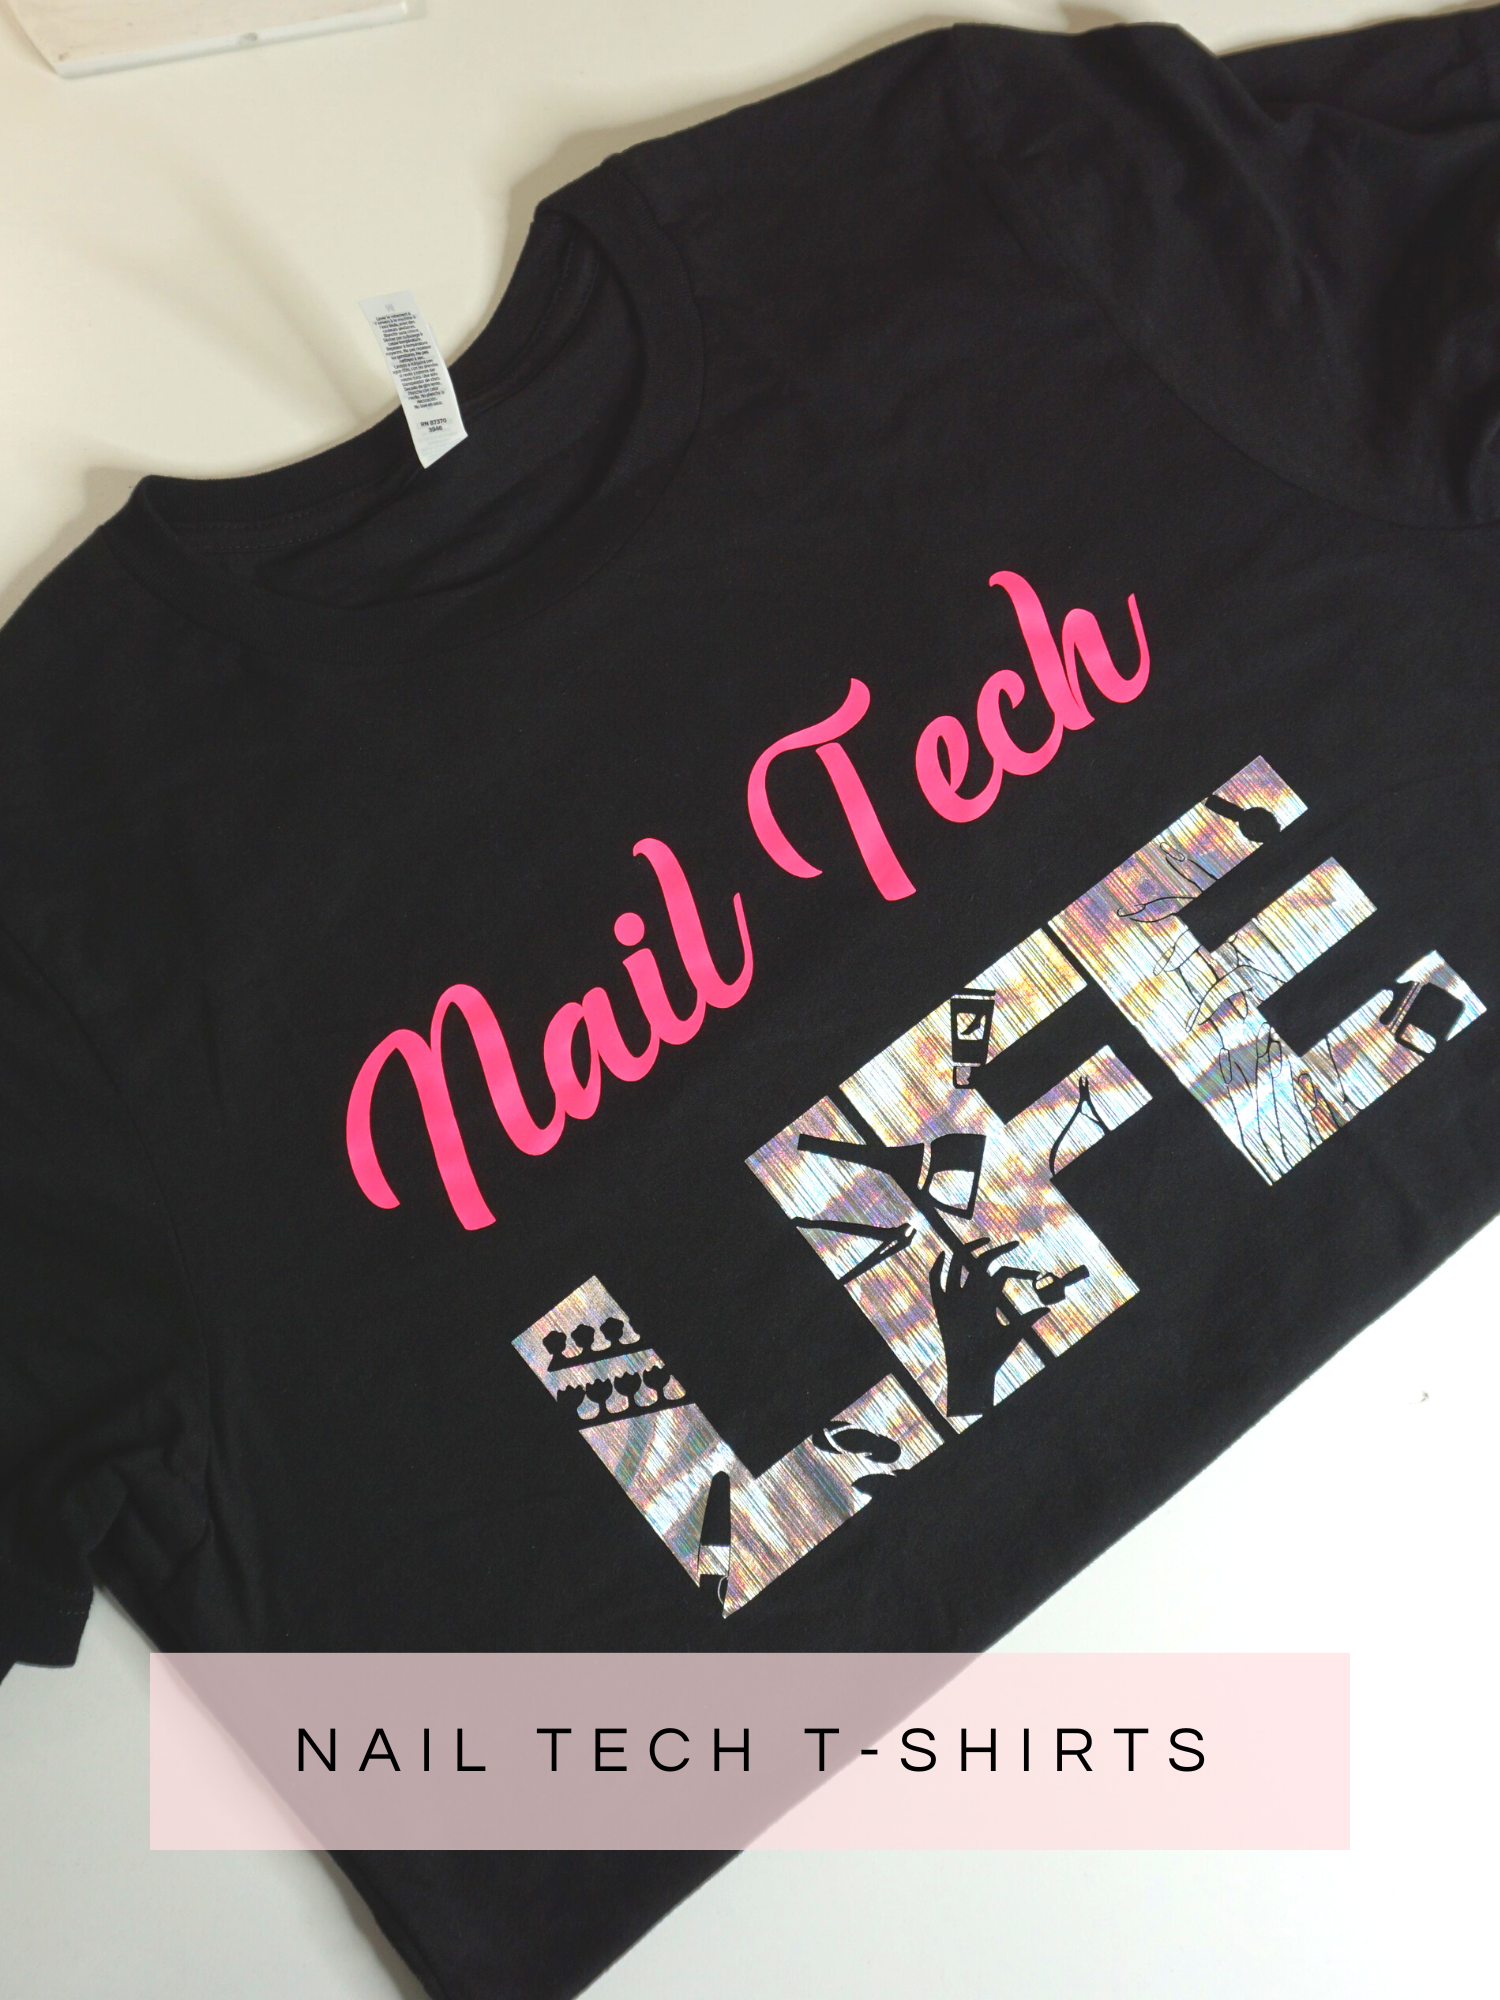 Nail Tech T-Shirts